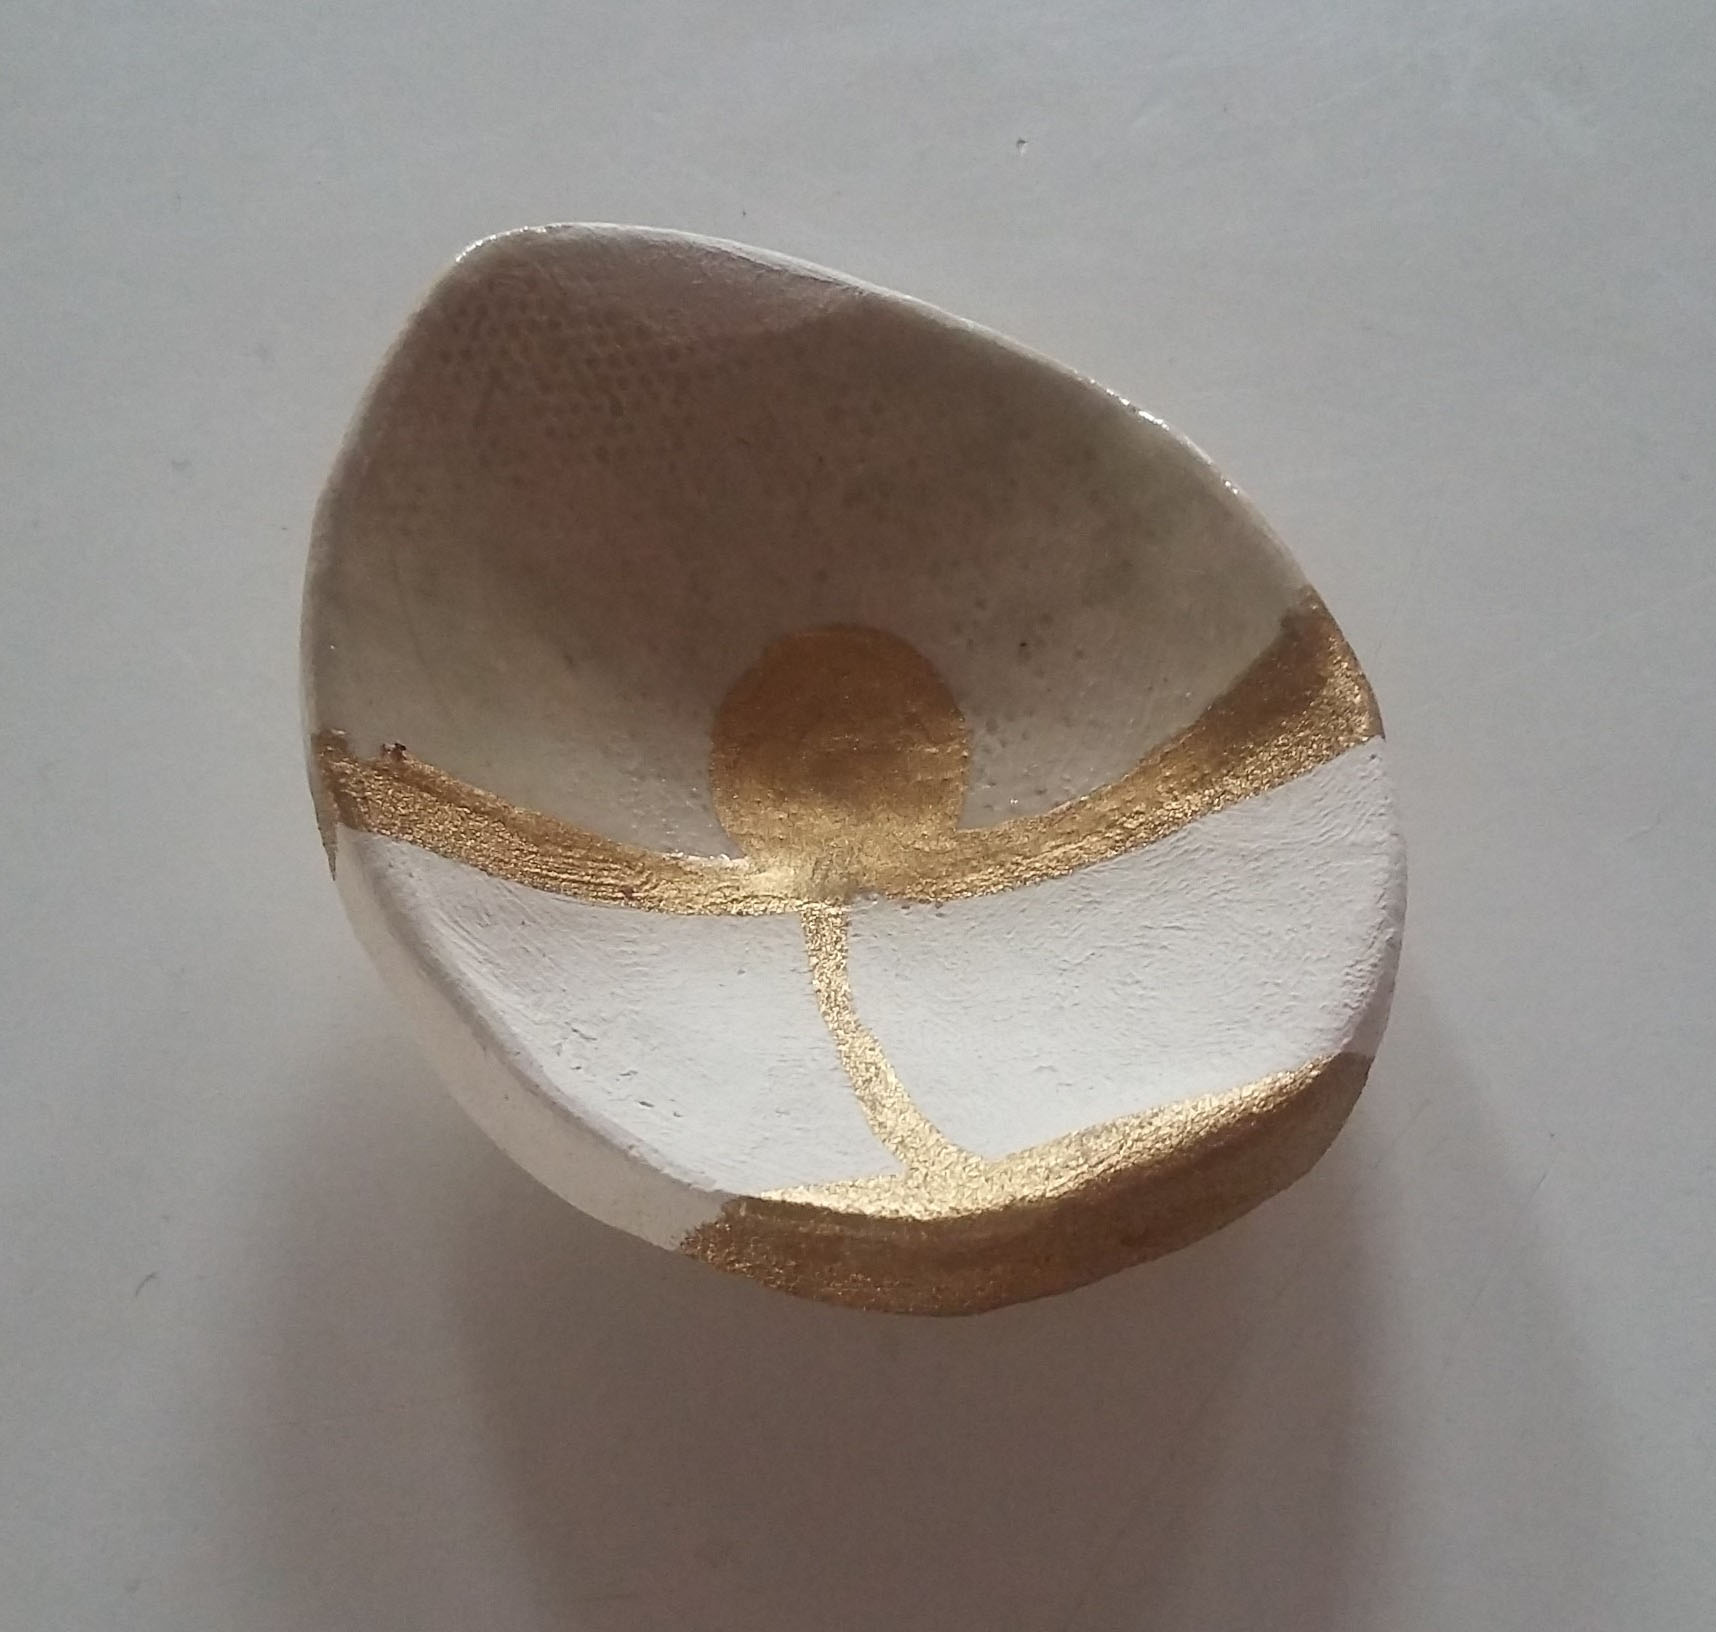 Miniature ceramic vessel.